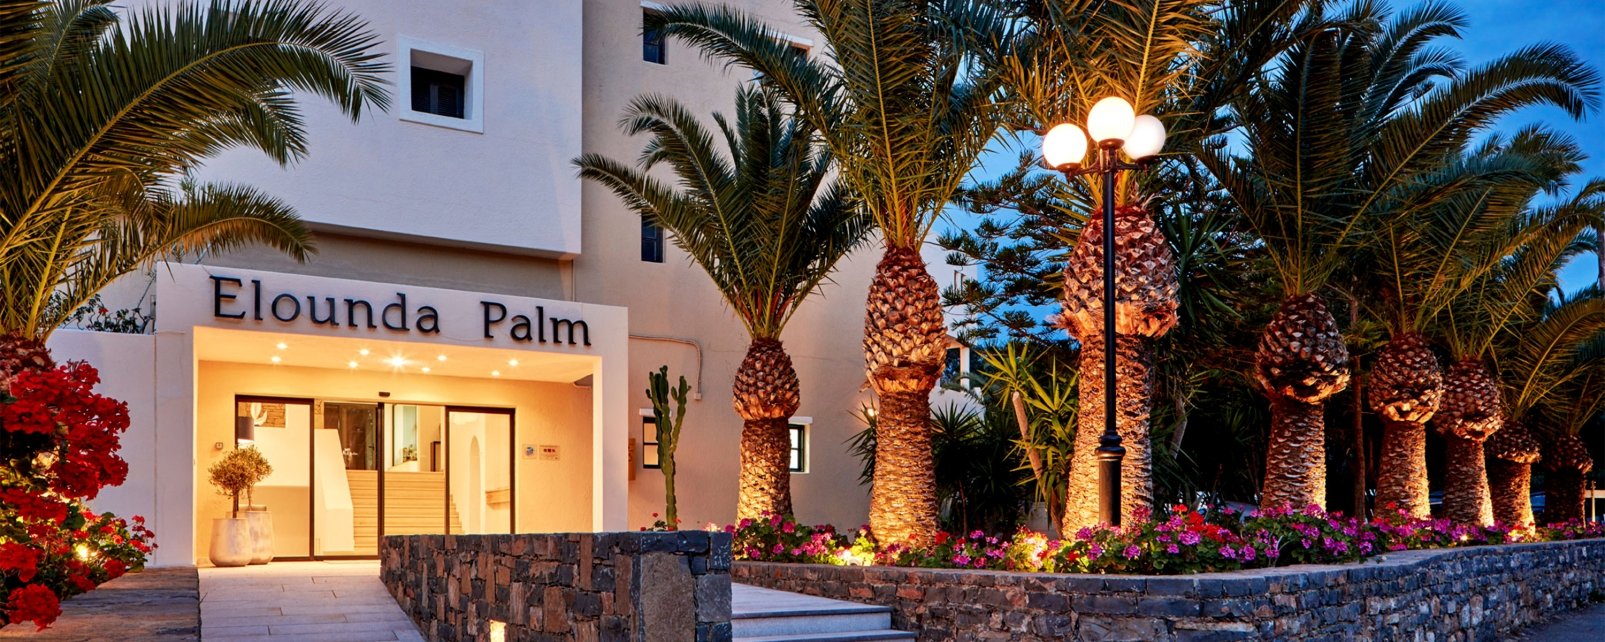 Hôtel Elounda Palm